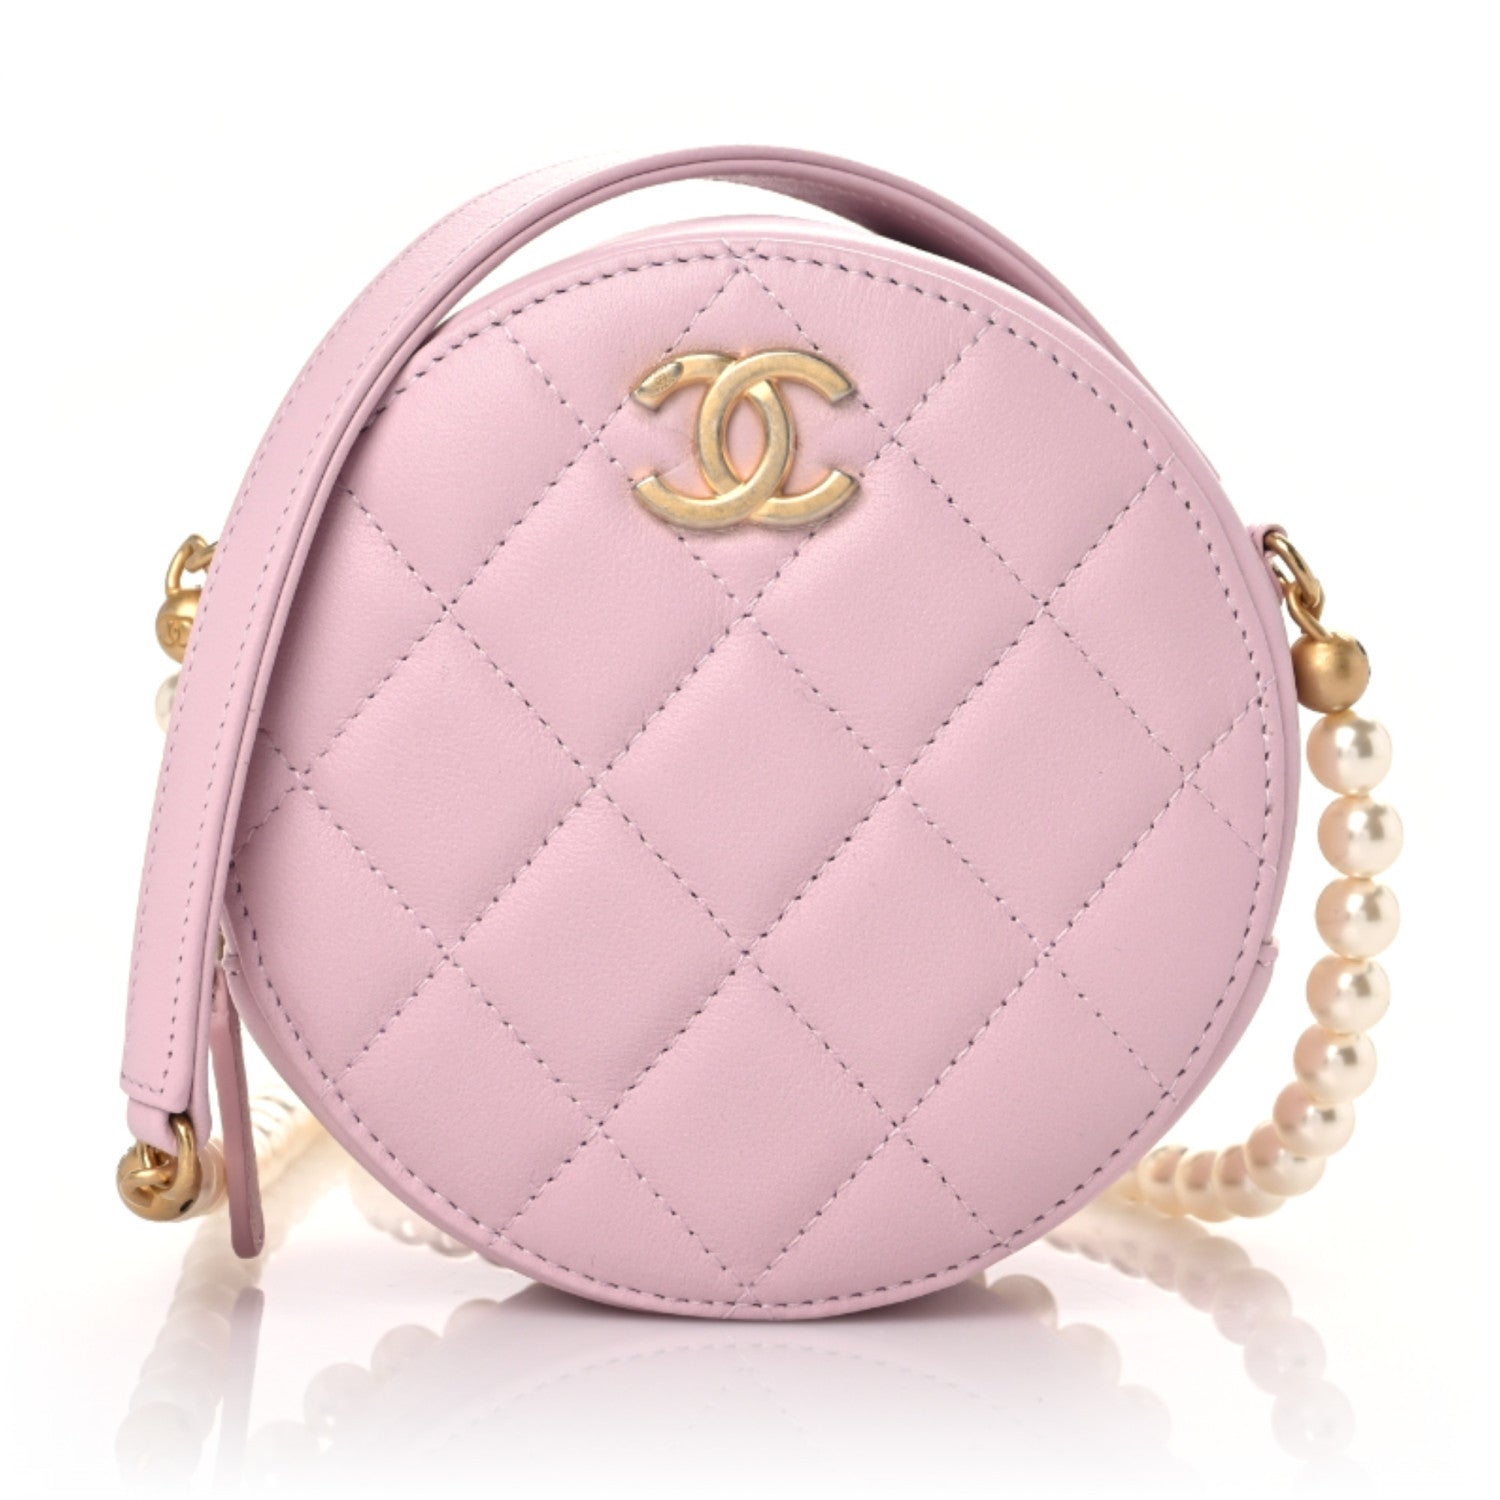 Chanel Iridescent Dark Turquoise Caviar Round Mini Crossbody Bag  Handbags  and Accessories Online  Ecommerce Retail  Sothebys